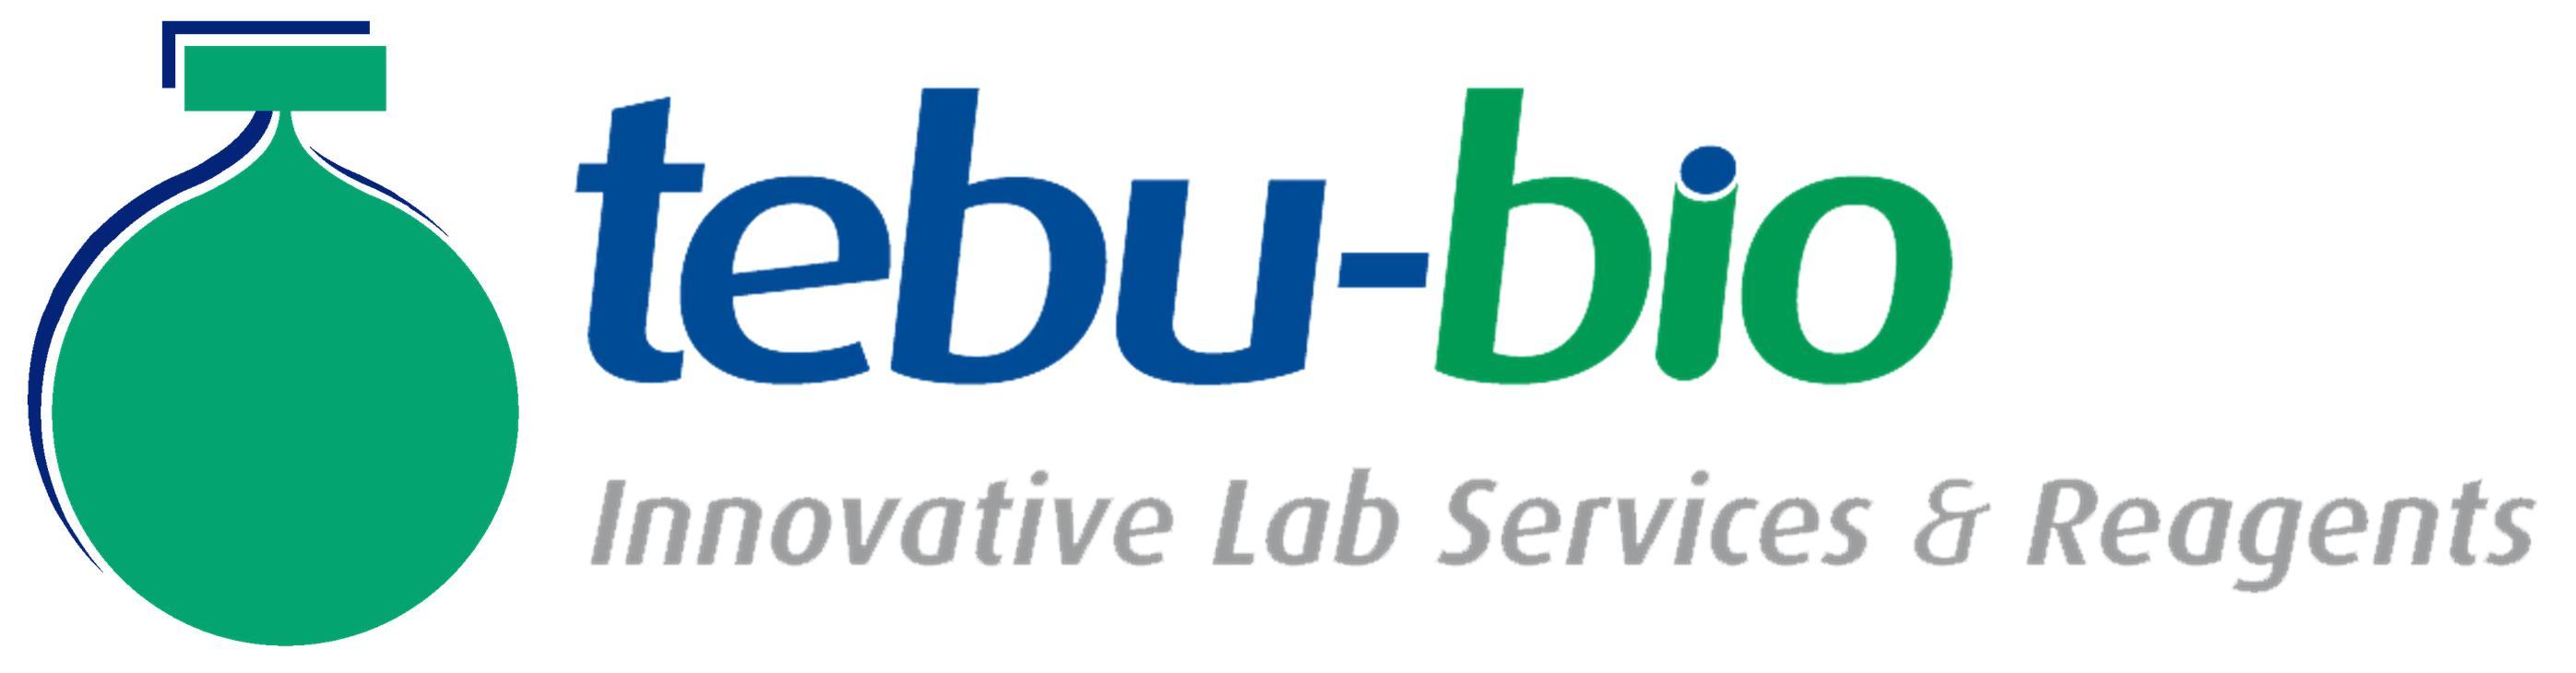 tebu-bio Logo and tagline.jpg